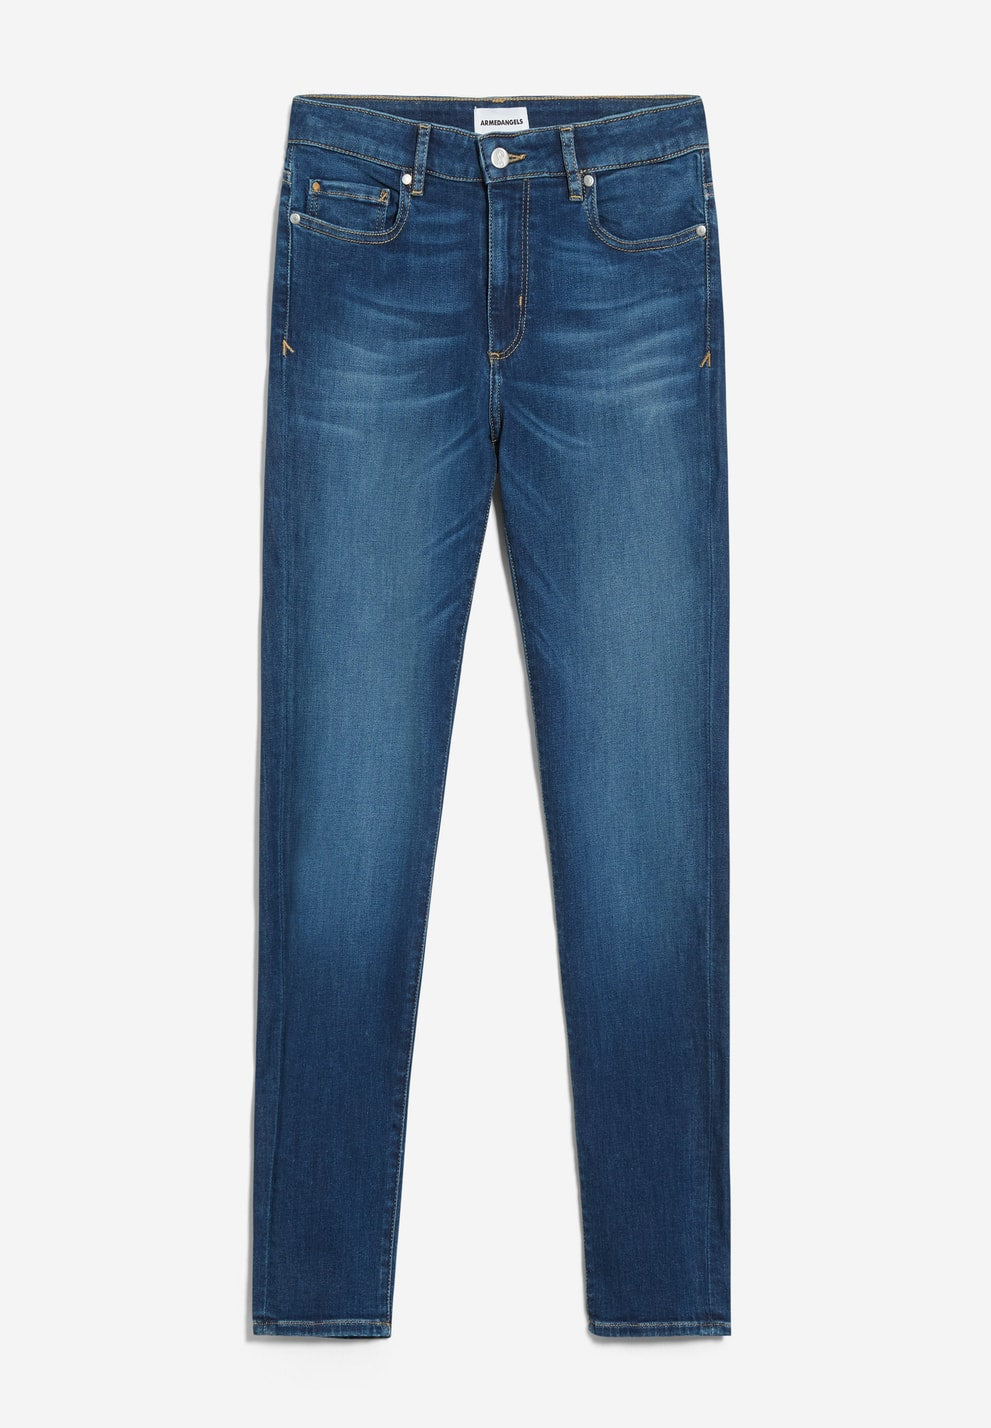 Jeans TILLAA X STRETCH iris blue | ARMEDANGELS